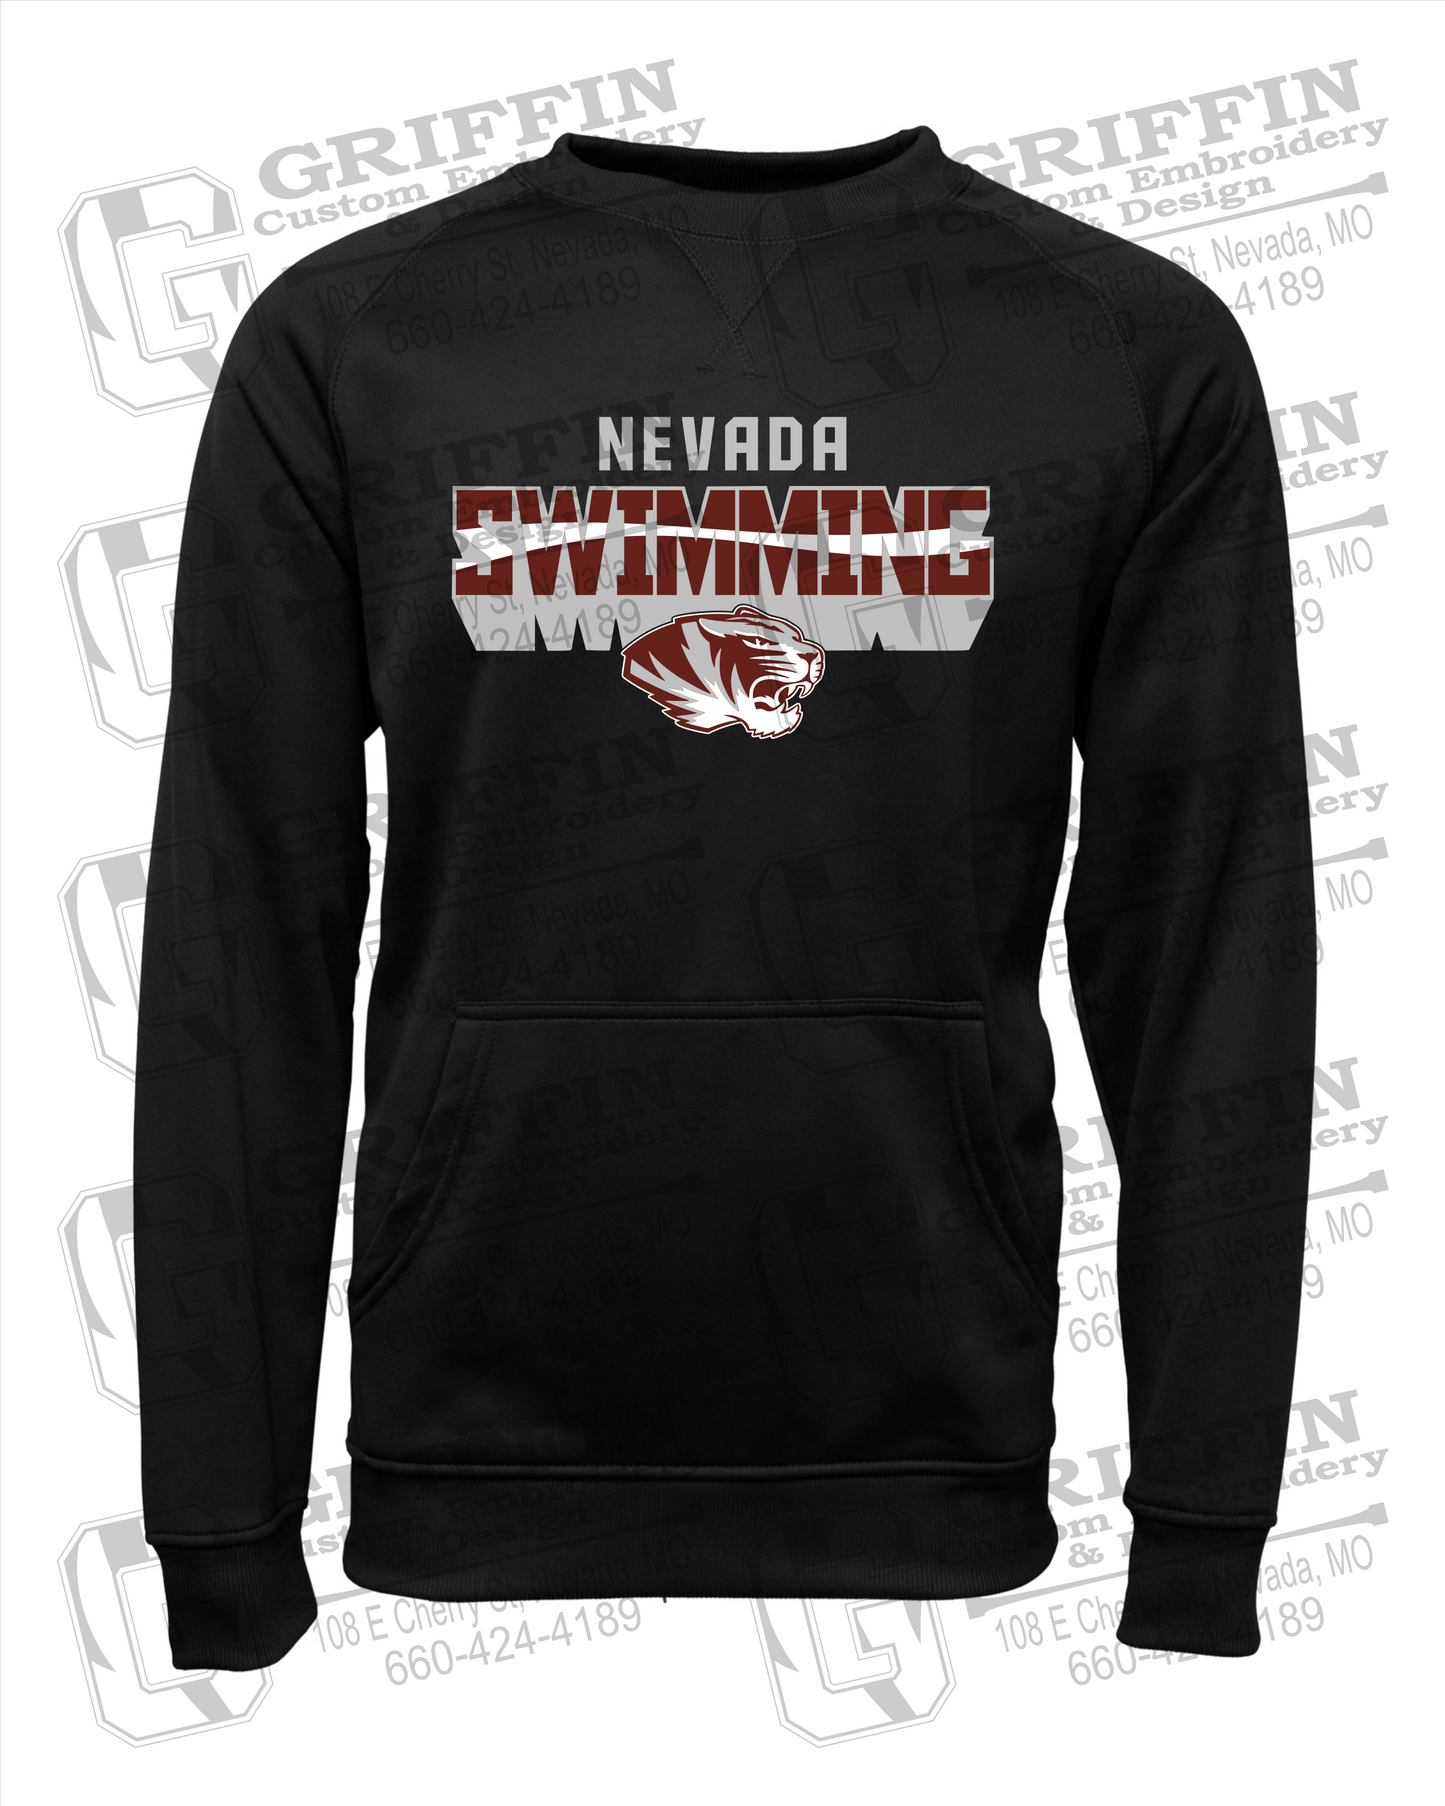 Nevada Tigers 23-V Youth Sweatshirt - Swimming